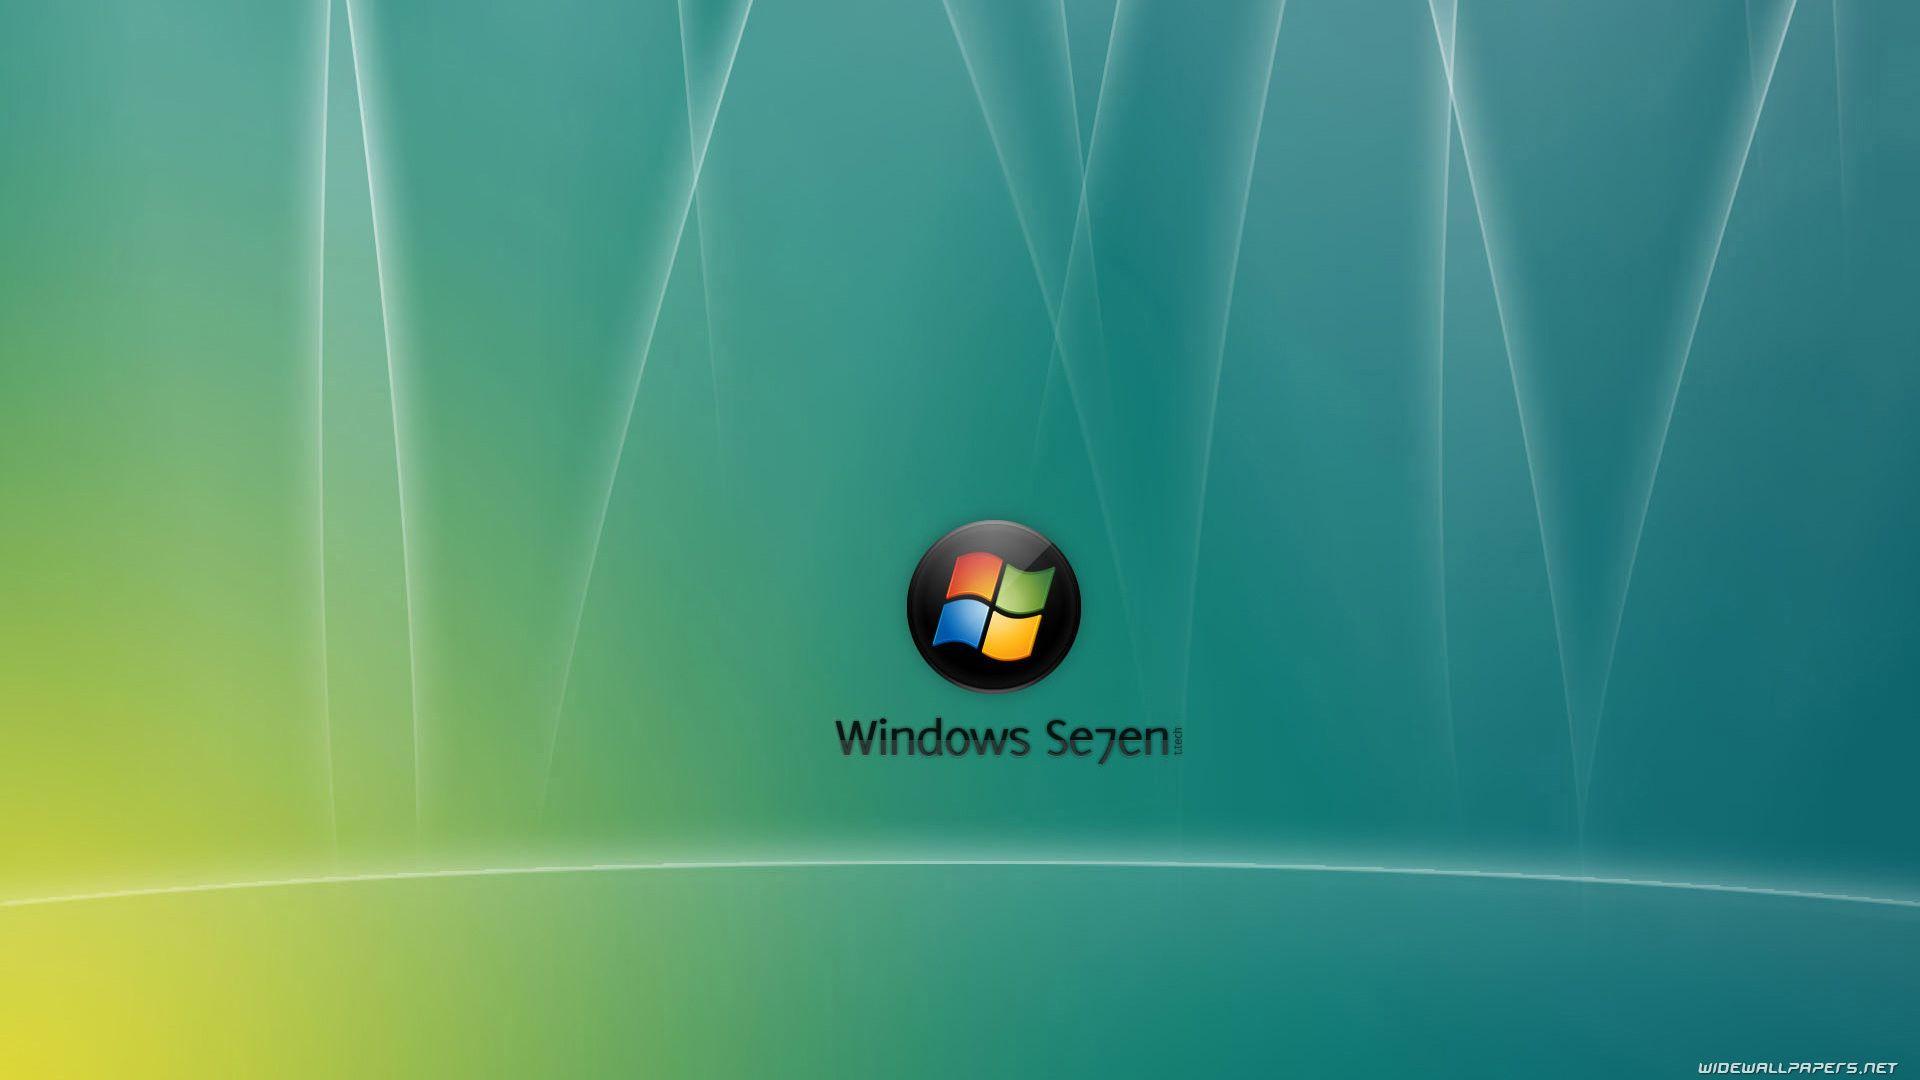 Windows 7 Wallpaper 1920X1080 187155